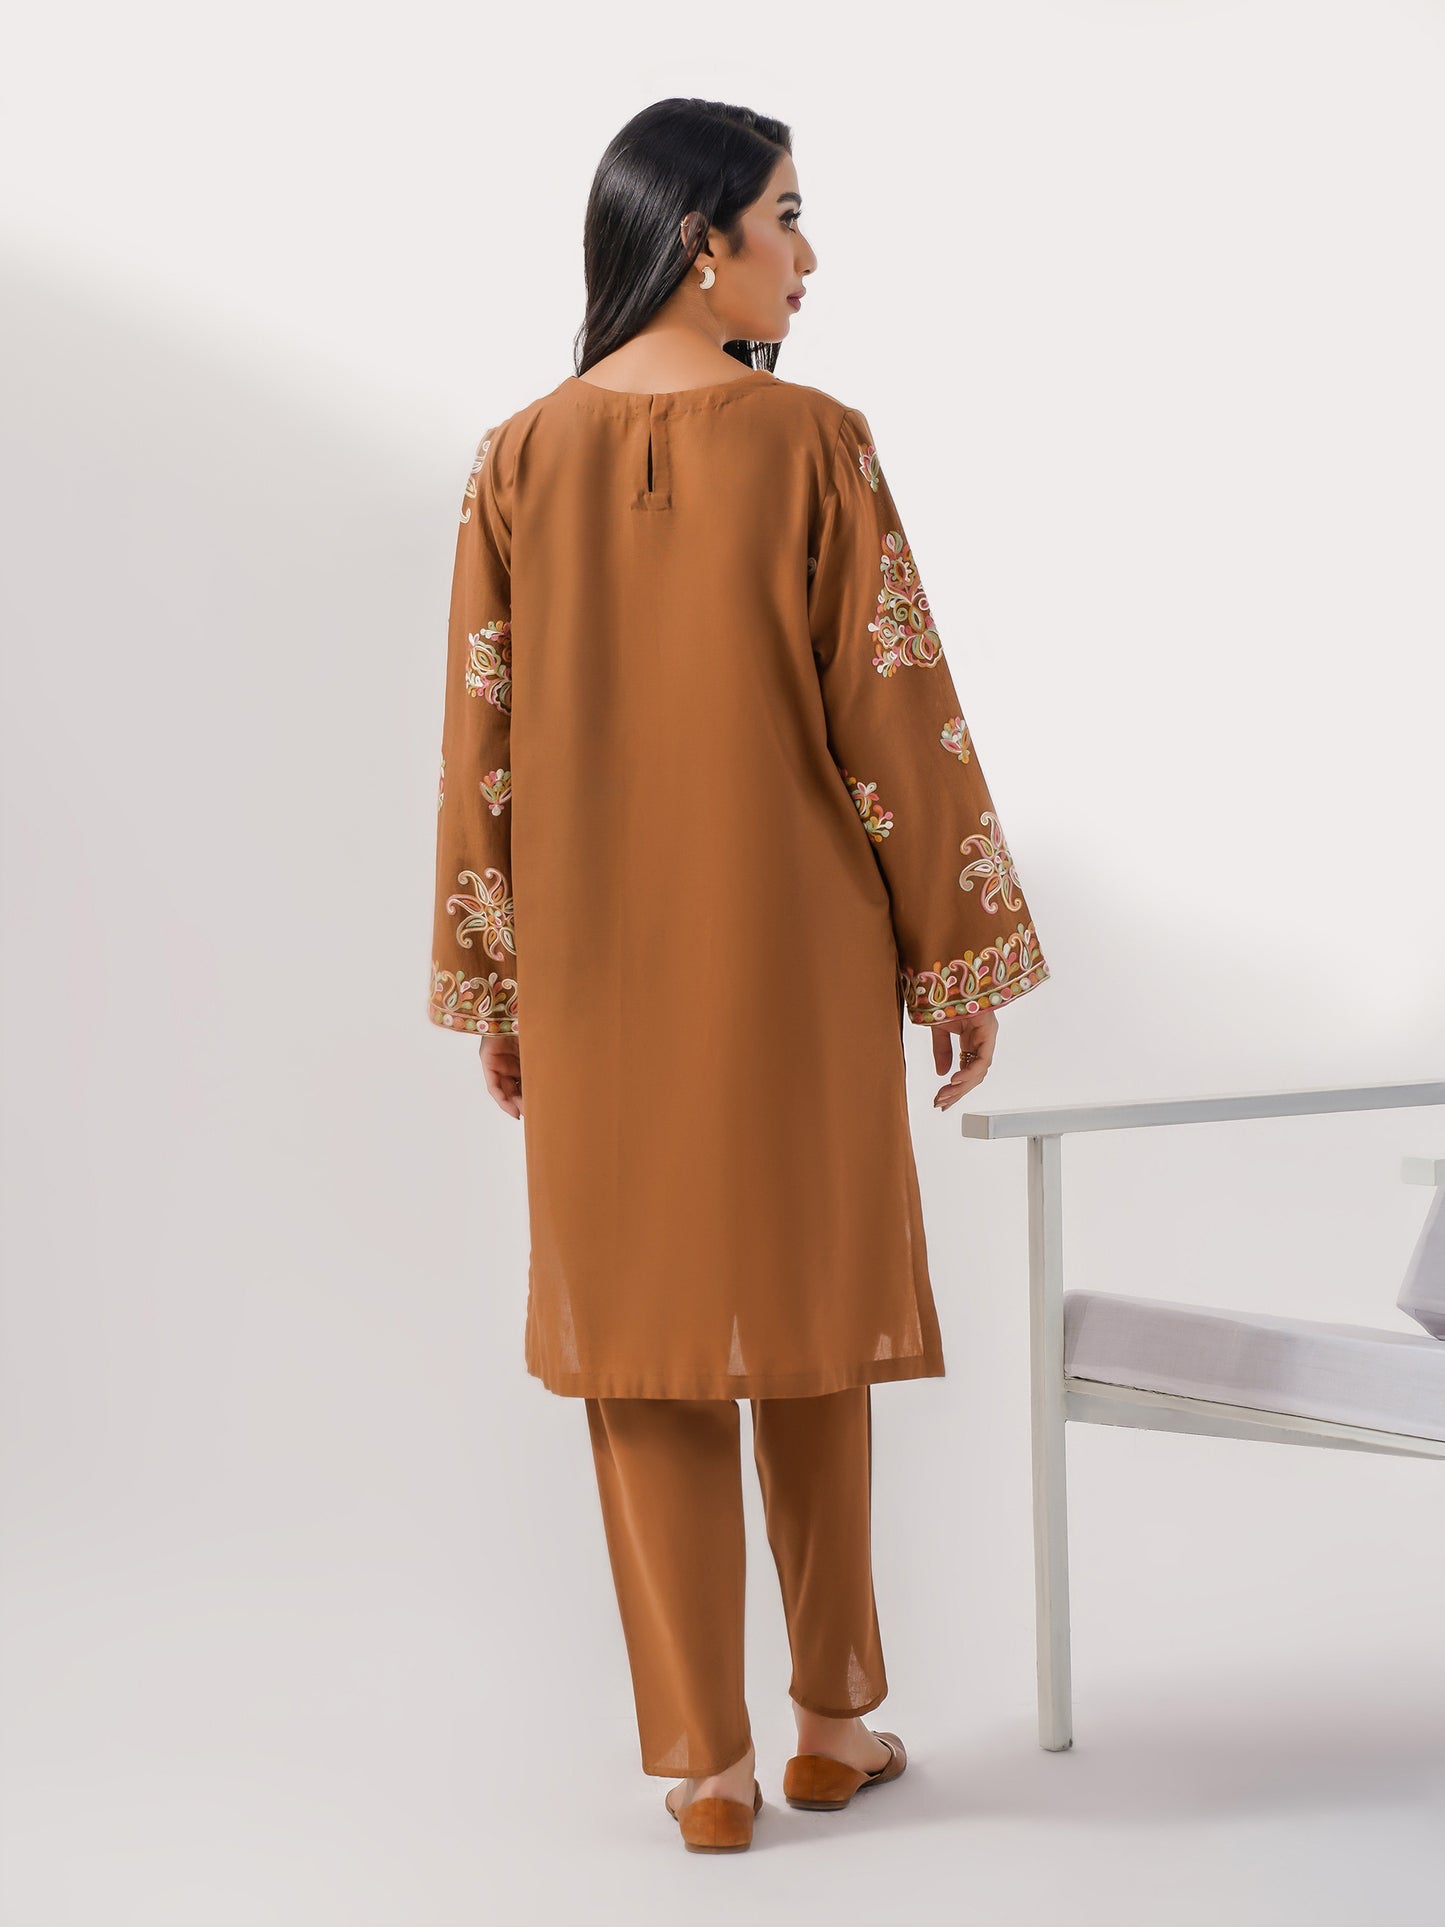 2 Piece Khaddar Suit-Embroidered (Pret)